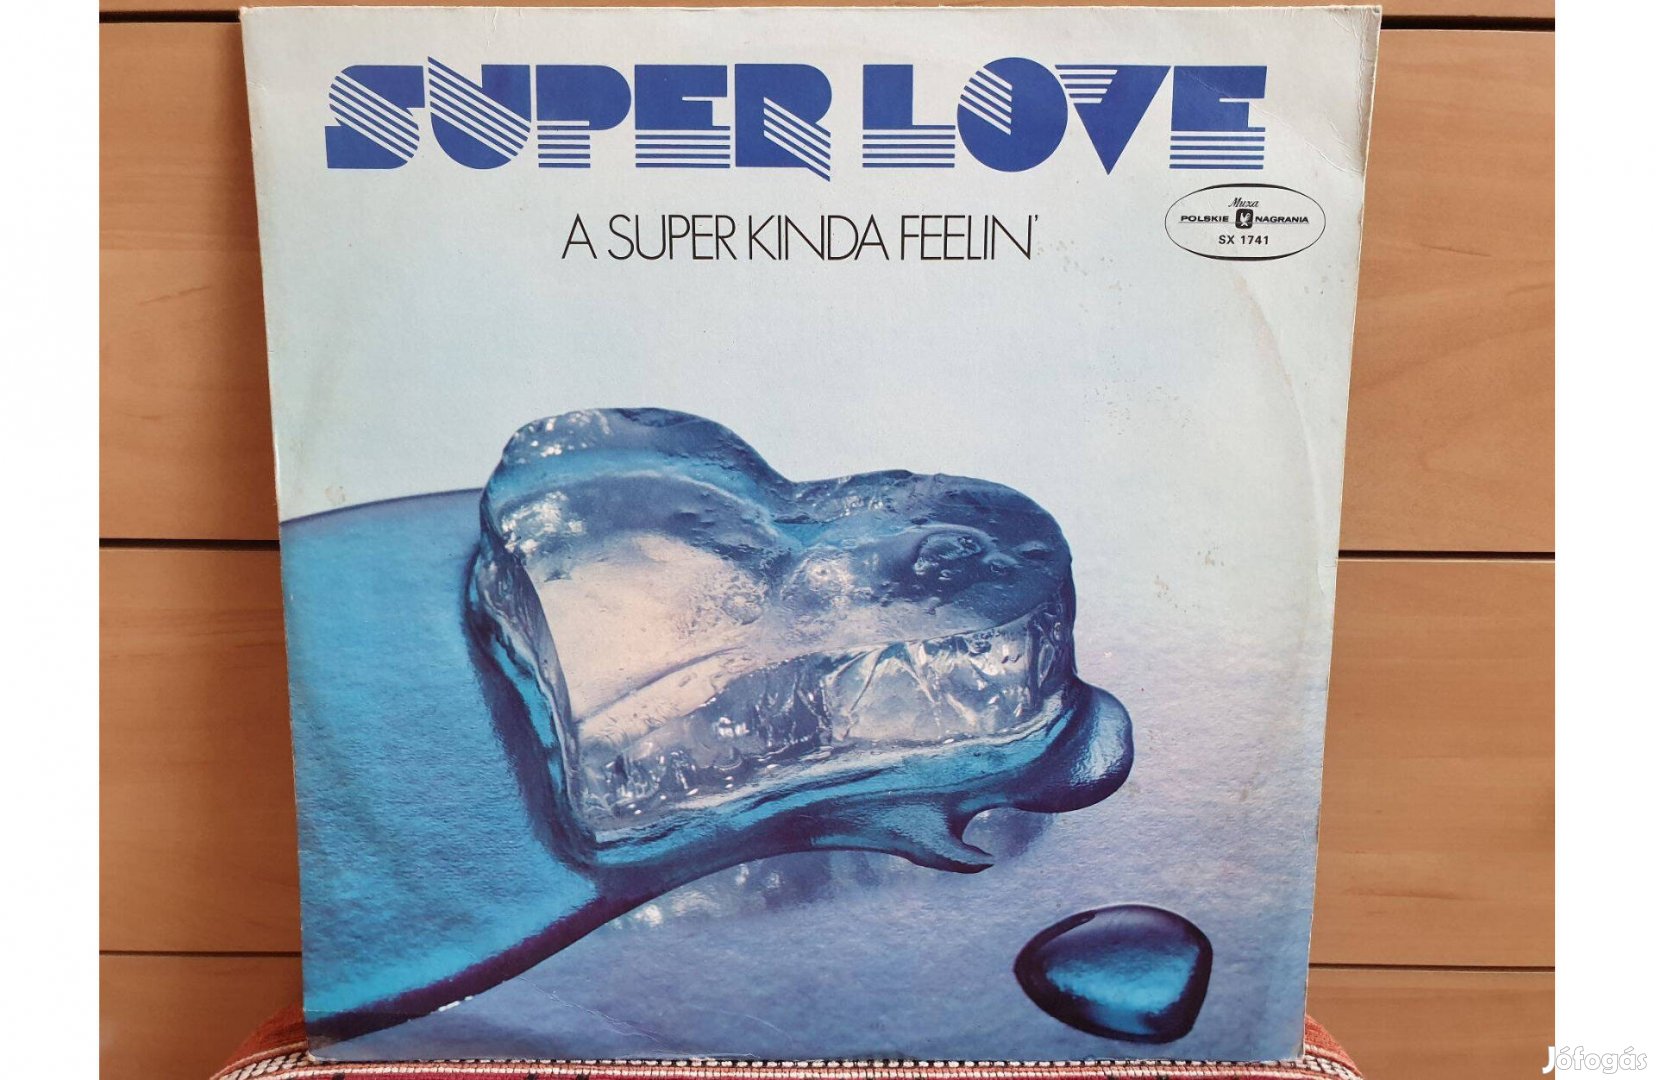 Hits Super Love hanglemez bakelit lemez Vinyl